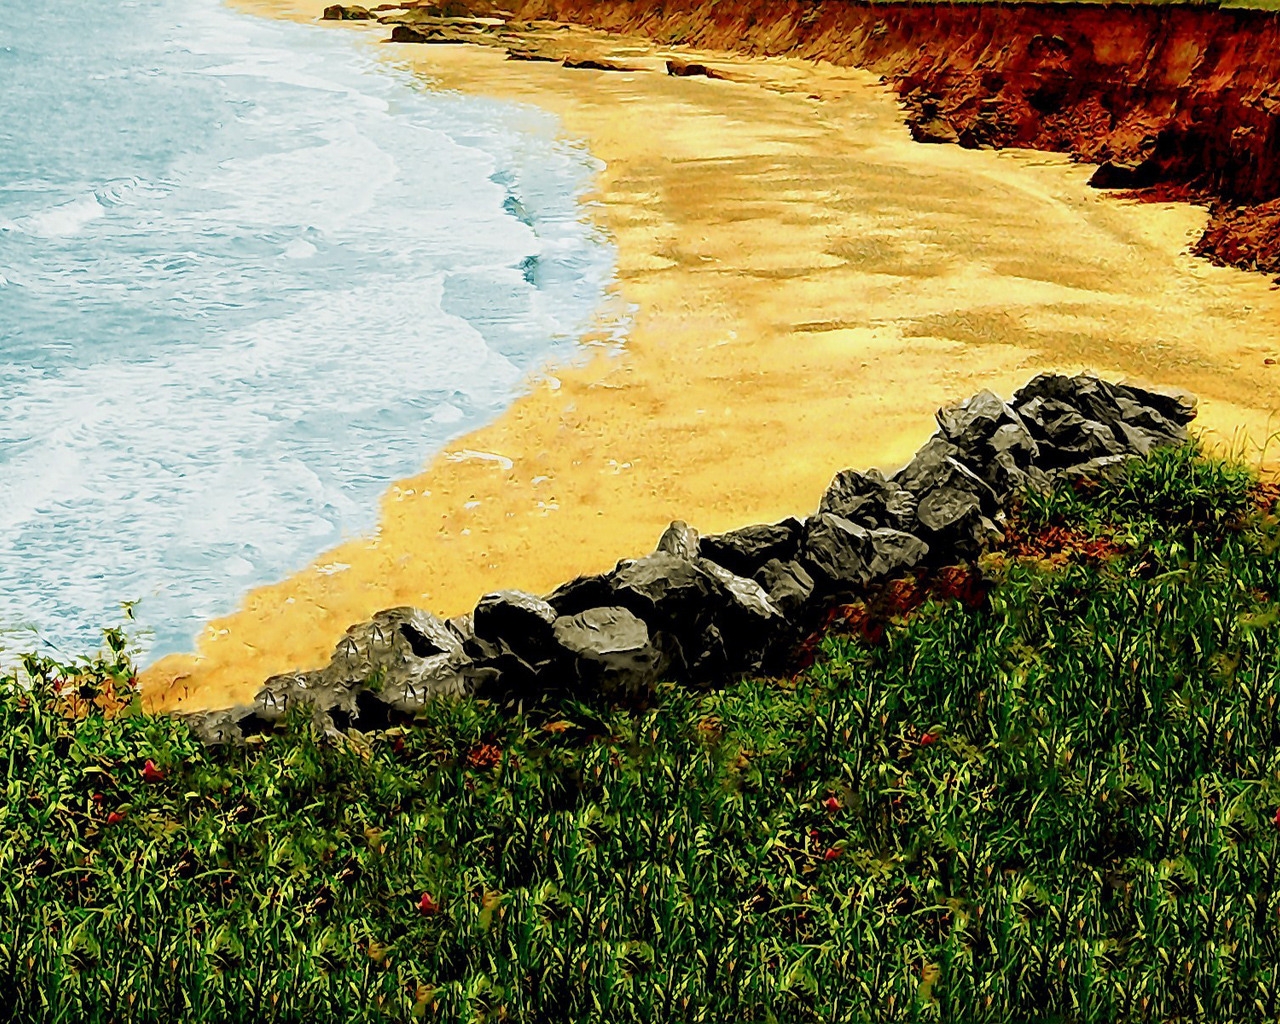 The Dream Beach for 1280 x 1024 resolution